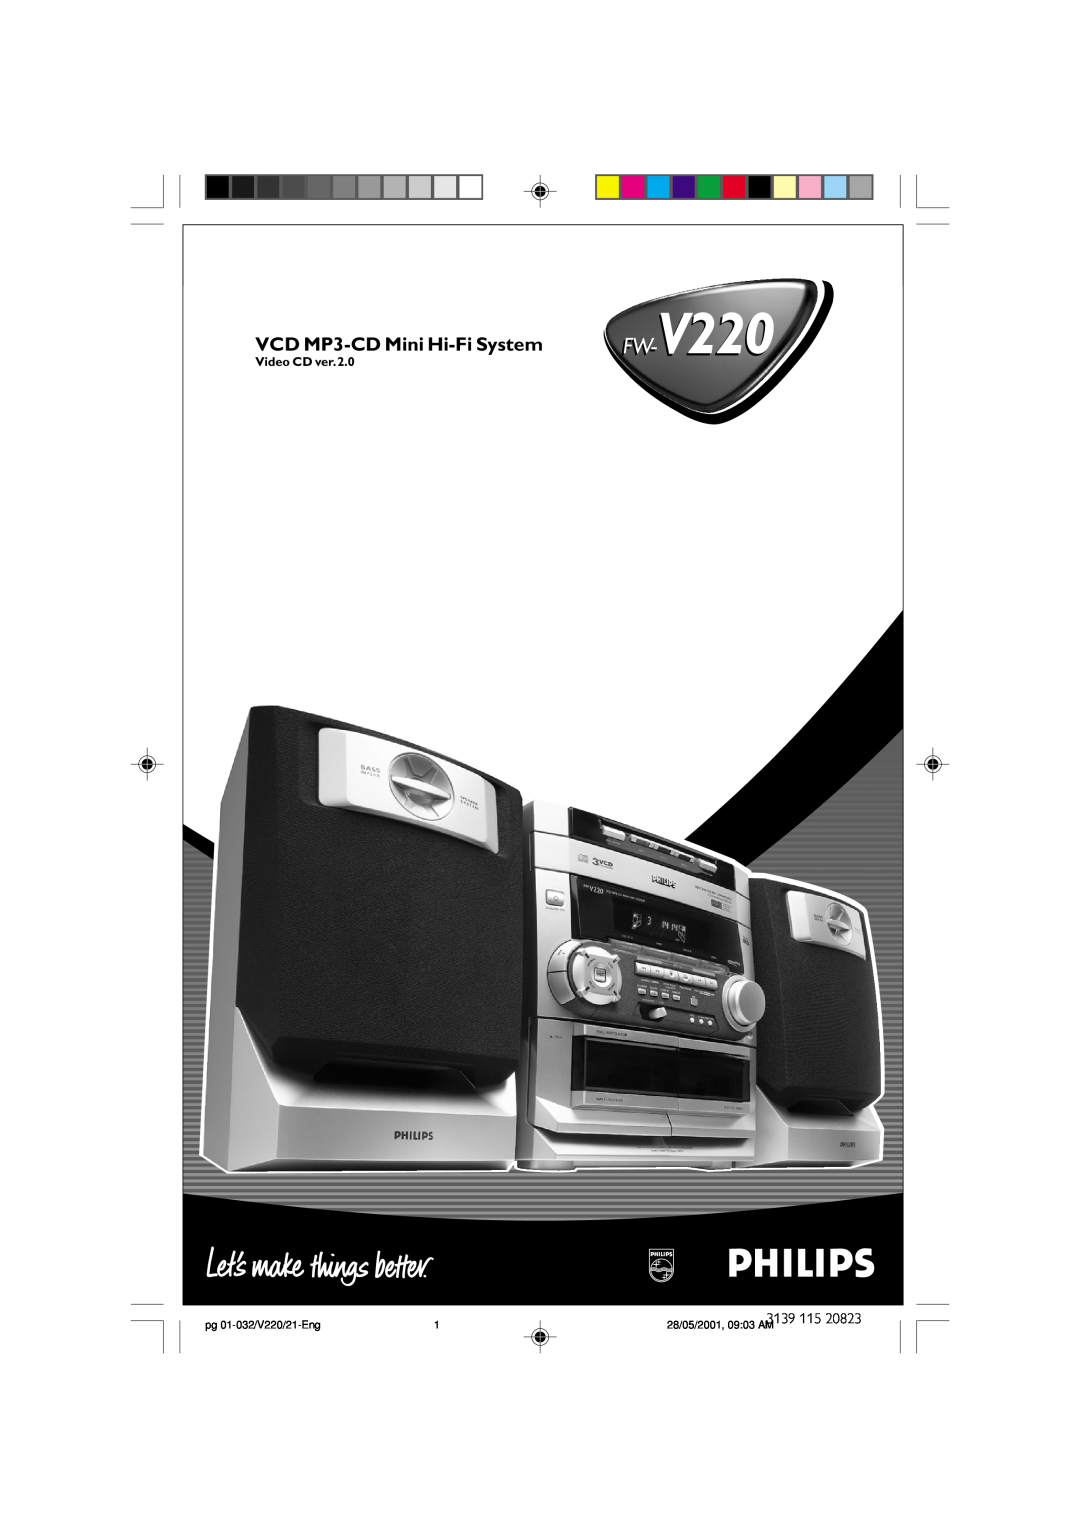 Philips FW-V220/21 manual VCD MP3-CDMini Hi-FiSystem, Video CD ver.2.0, pg 01-032/V220/21-Eng, 28/05/2001, 09:03 AM 